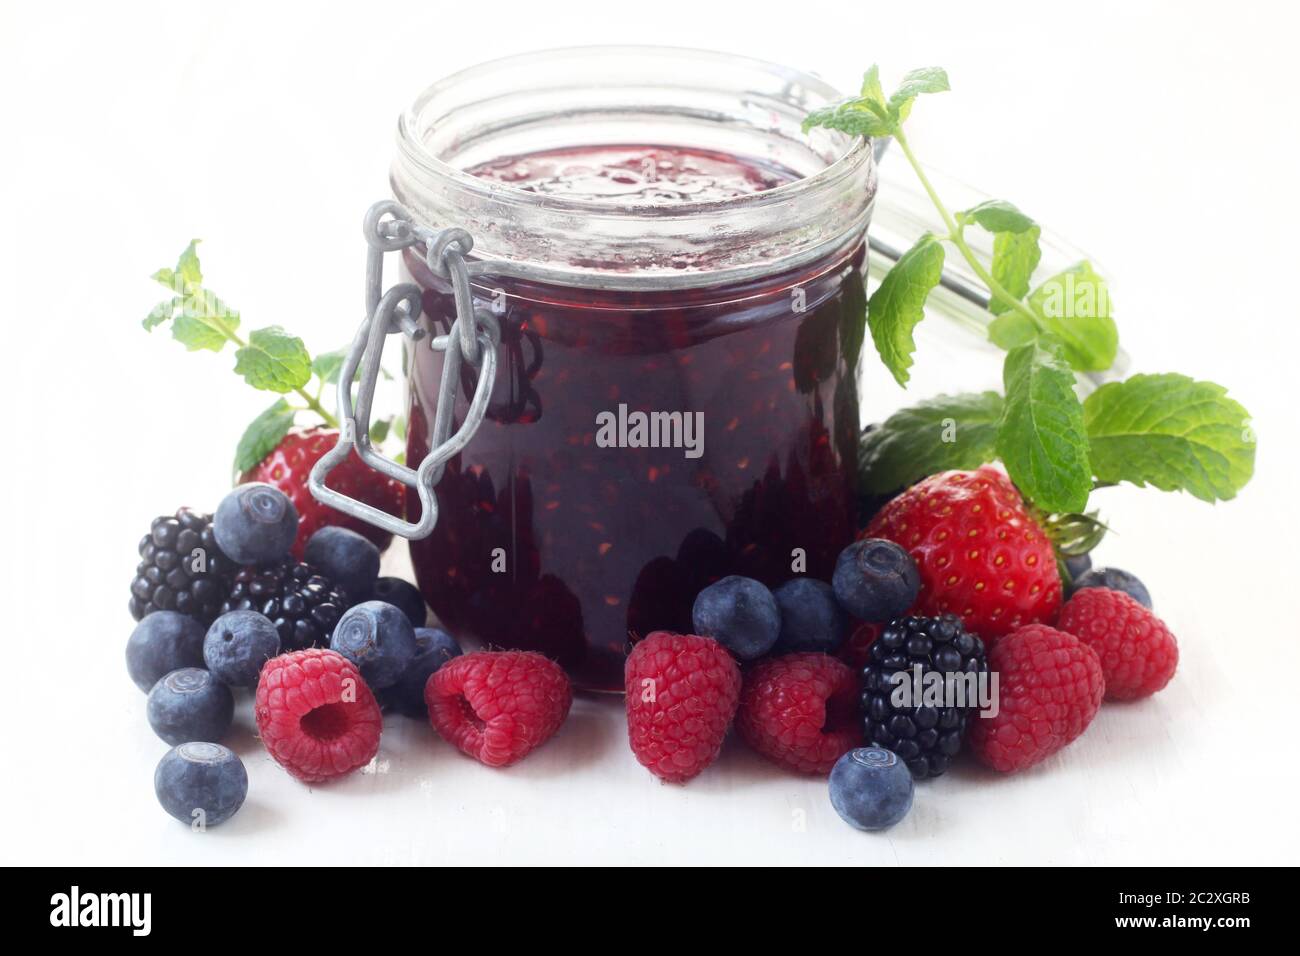 Jam With Mixed Berries Stock Photo